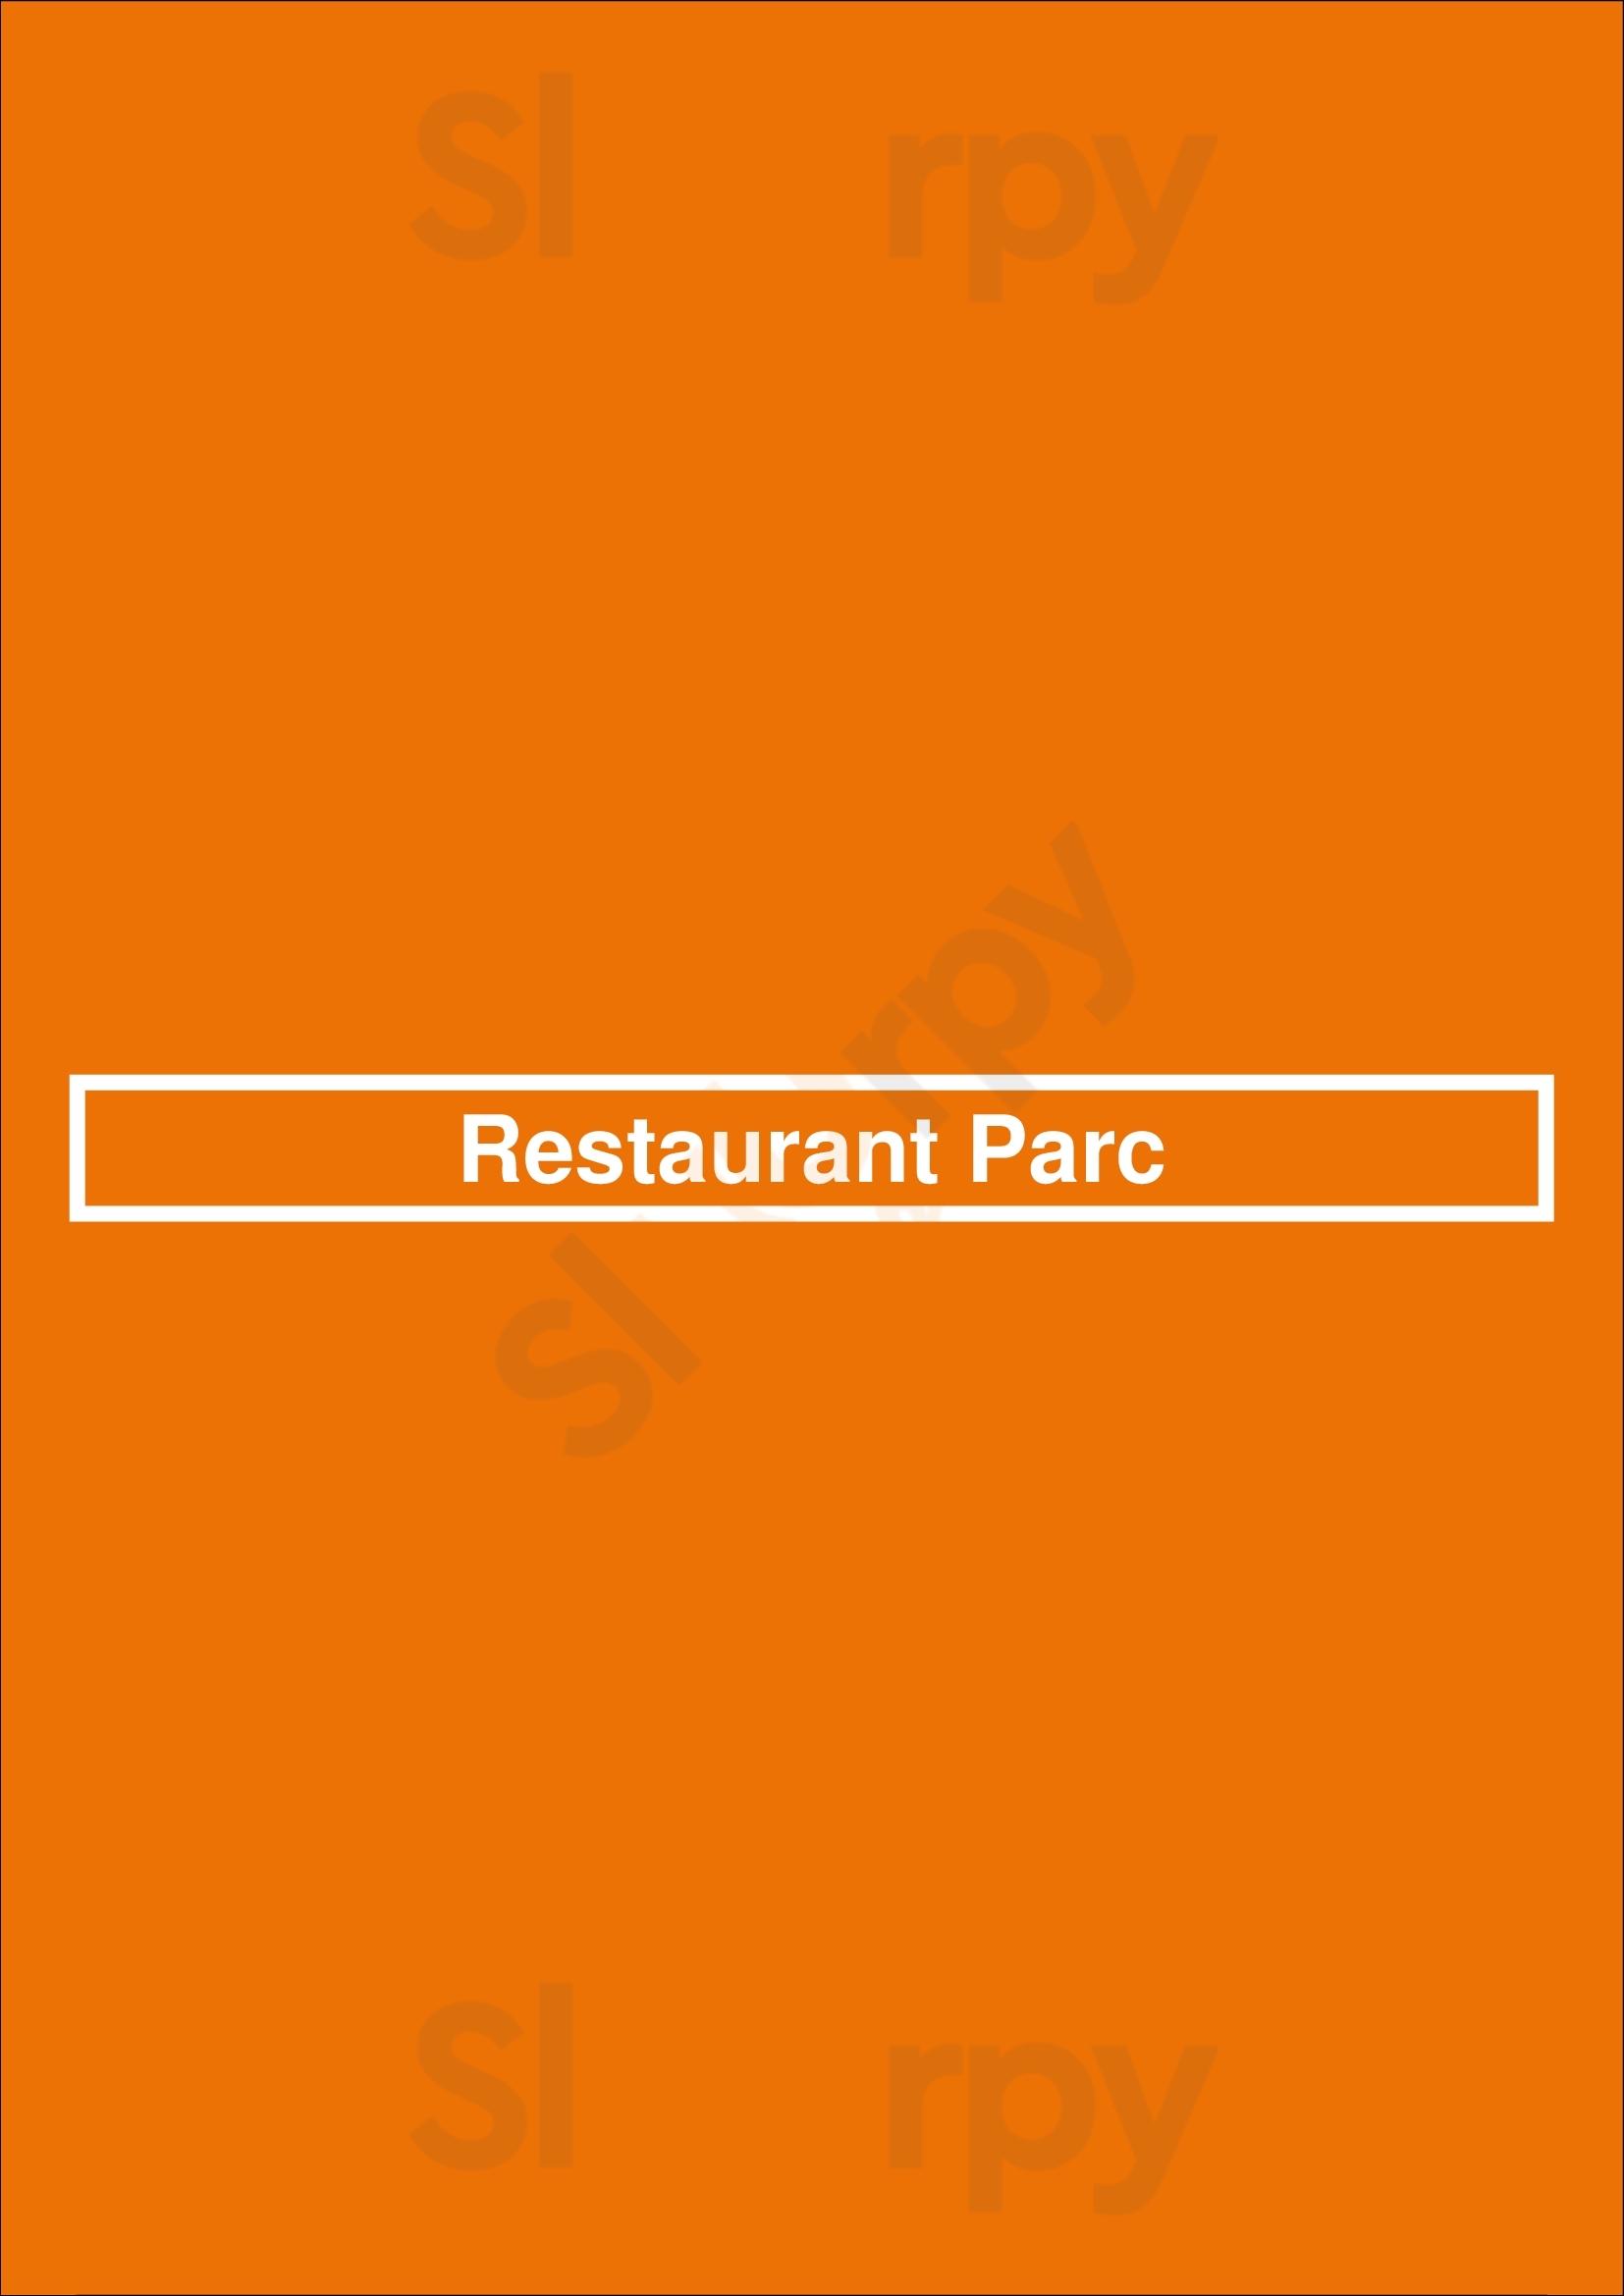 Restaurant Parc Hilversum Menu - 1